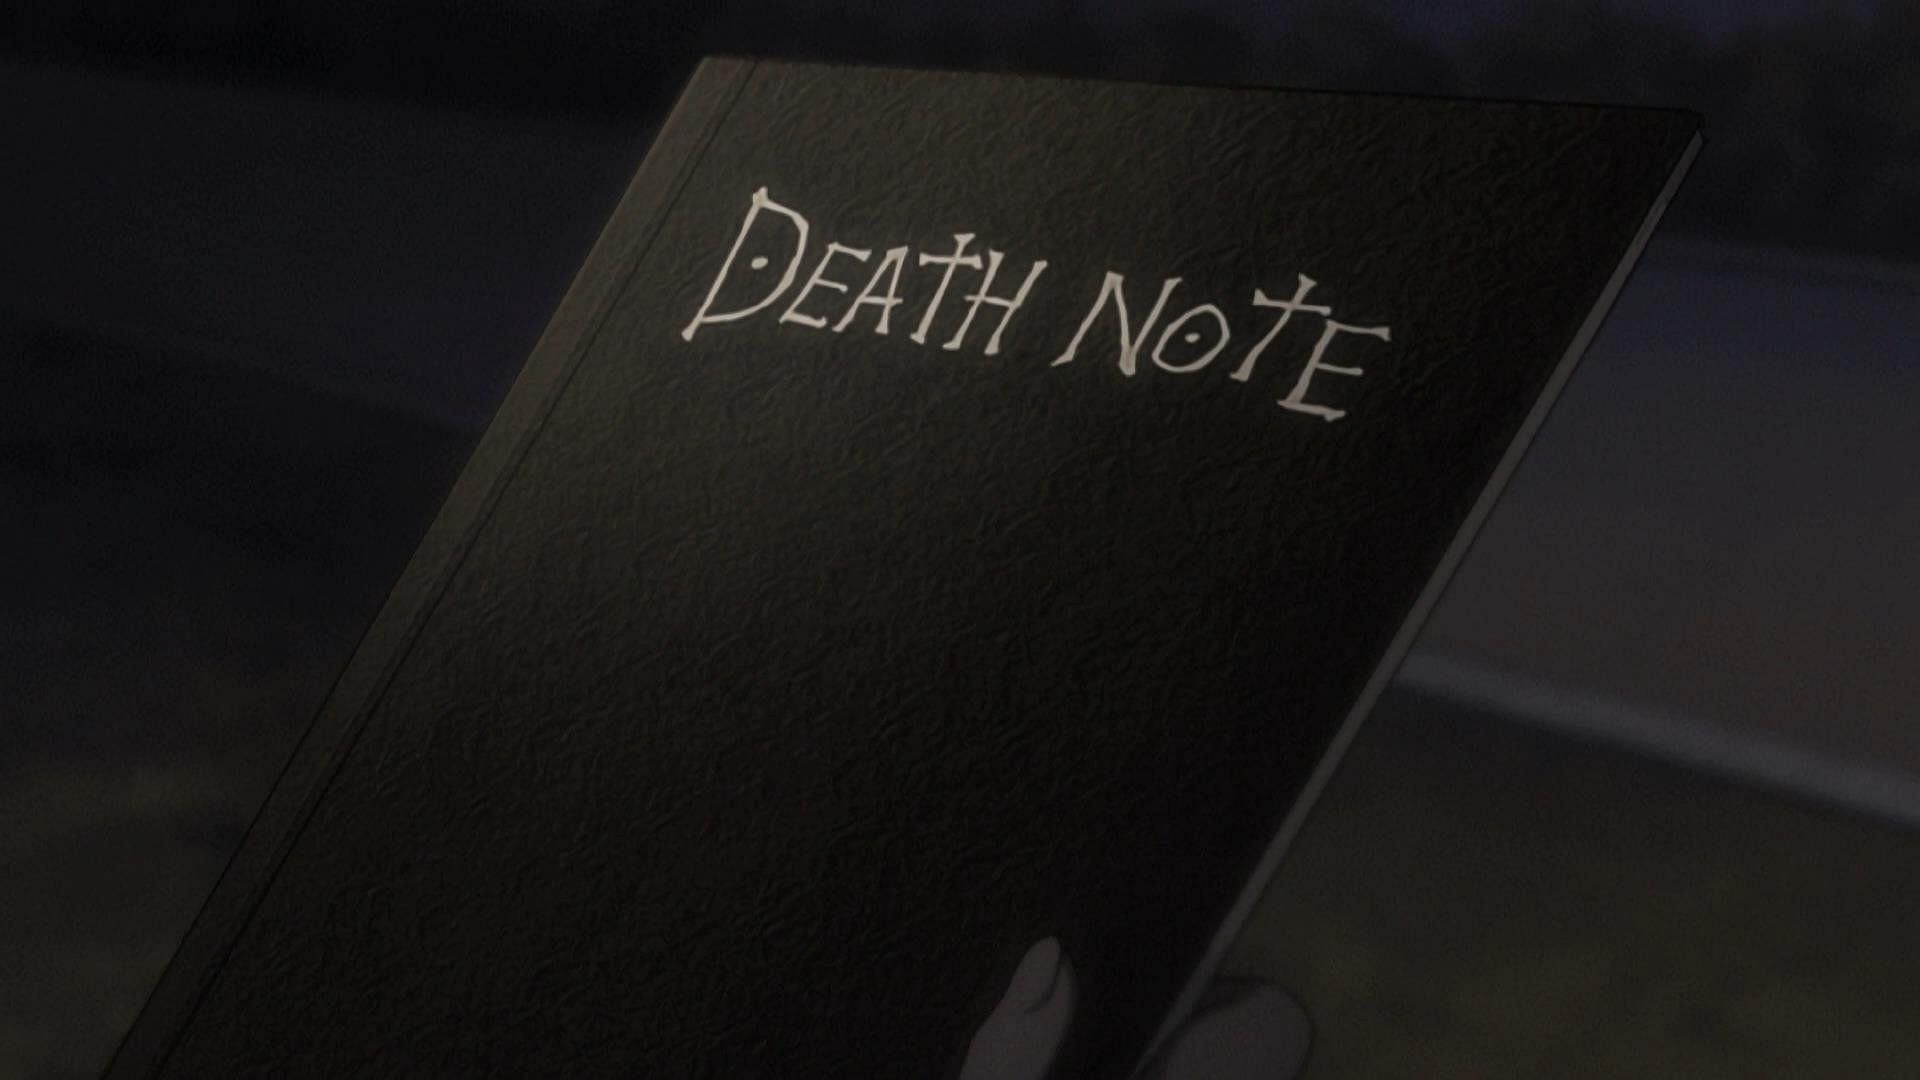 The Death Note as seen in the Death Note anime (Image Credits: Tsugumi Ohba/Shueisha, Viz Media, Death Note)